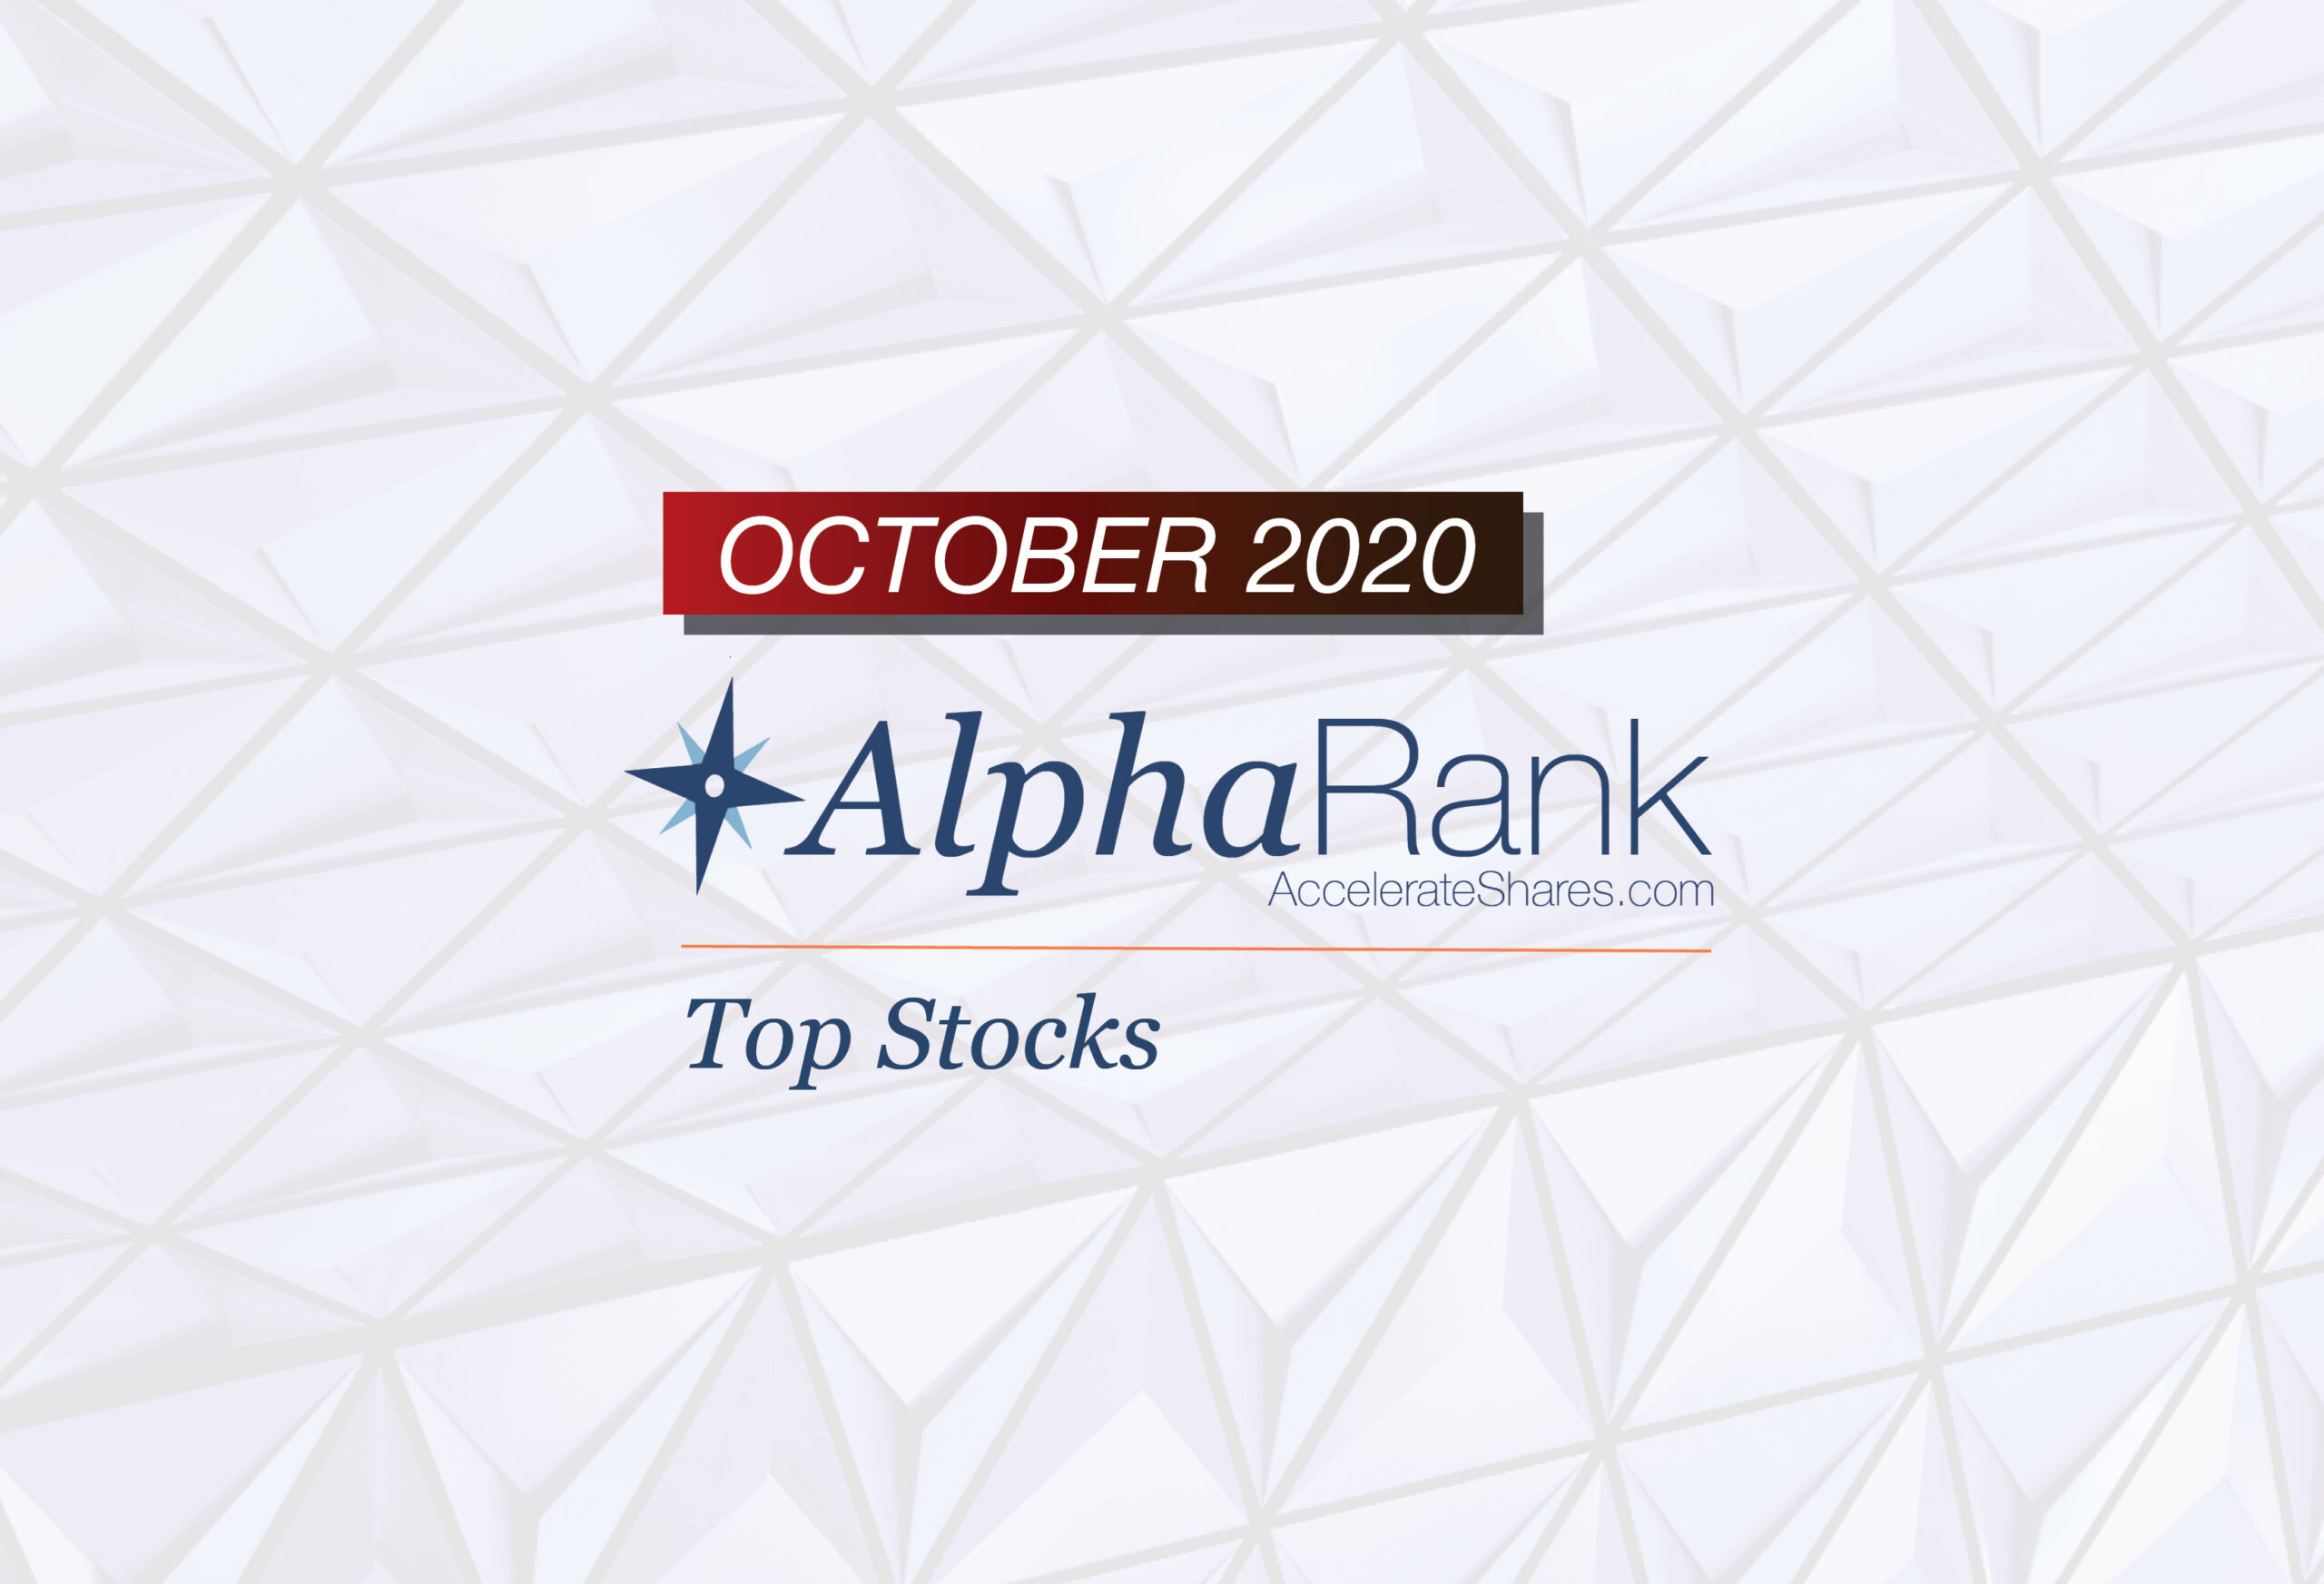 AlphaRank Top Stocks—October 2020